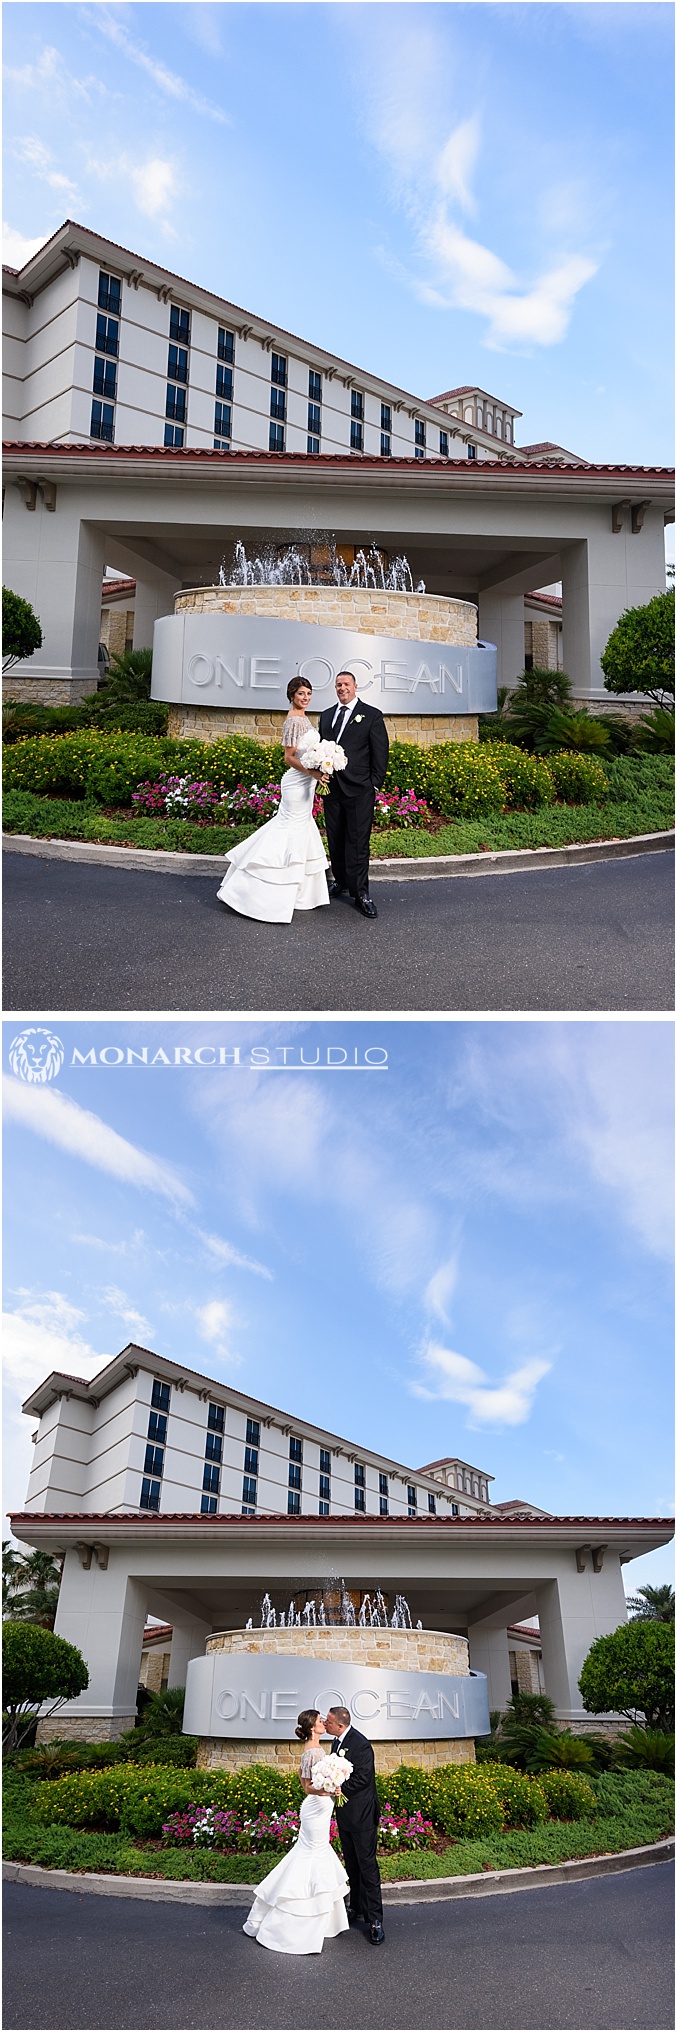 Jacksonville-Wedding-Photographer-One-Ocean-051.jpg